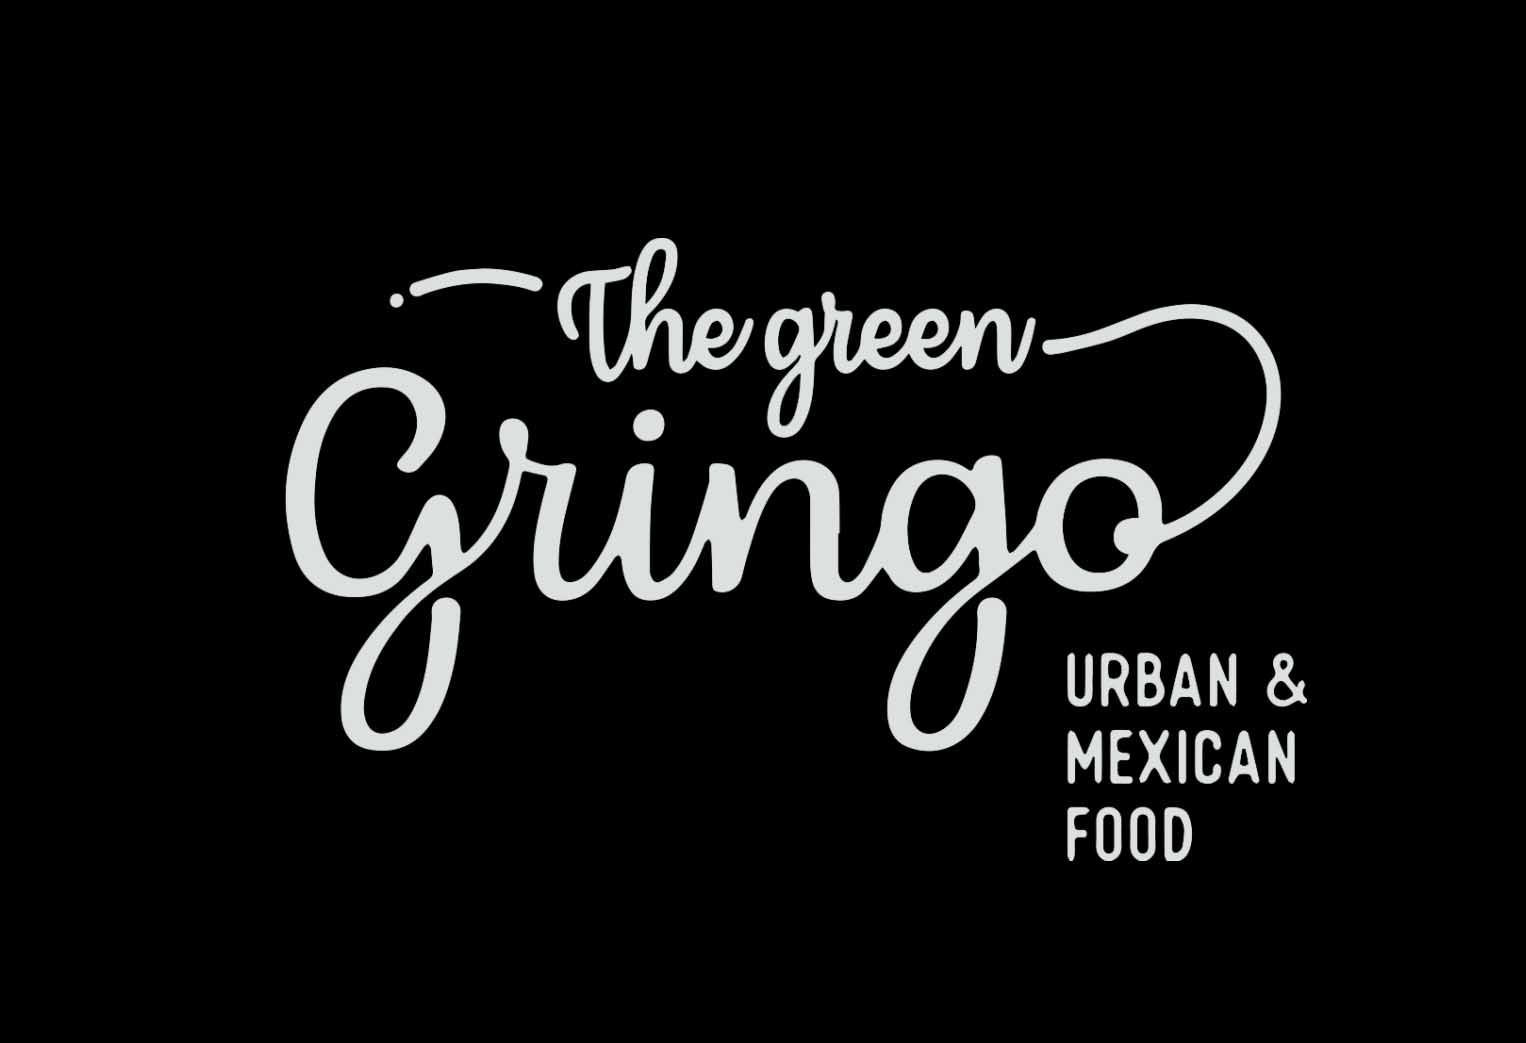 The green Gringo